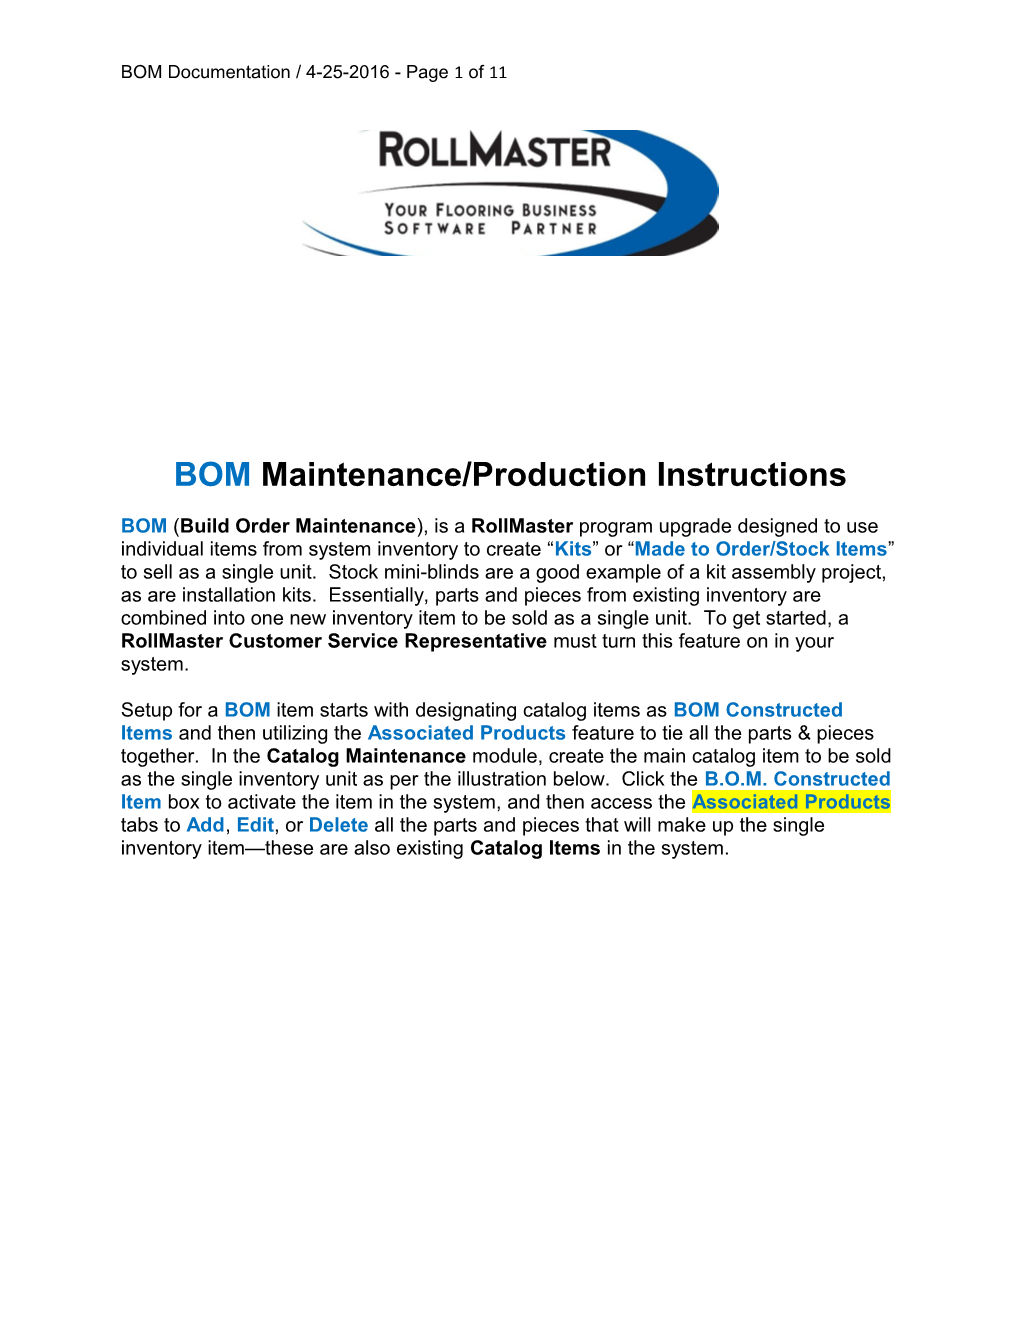 BOM Maintenance/Production Instructions